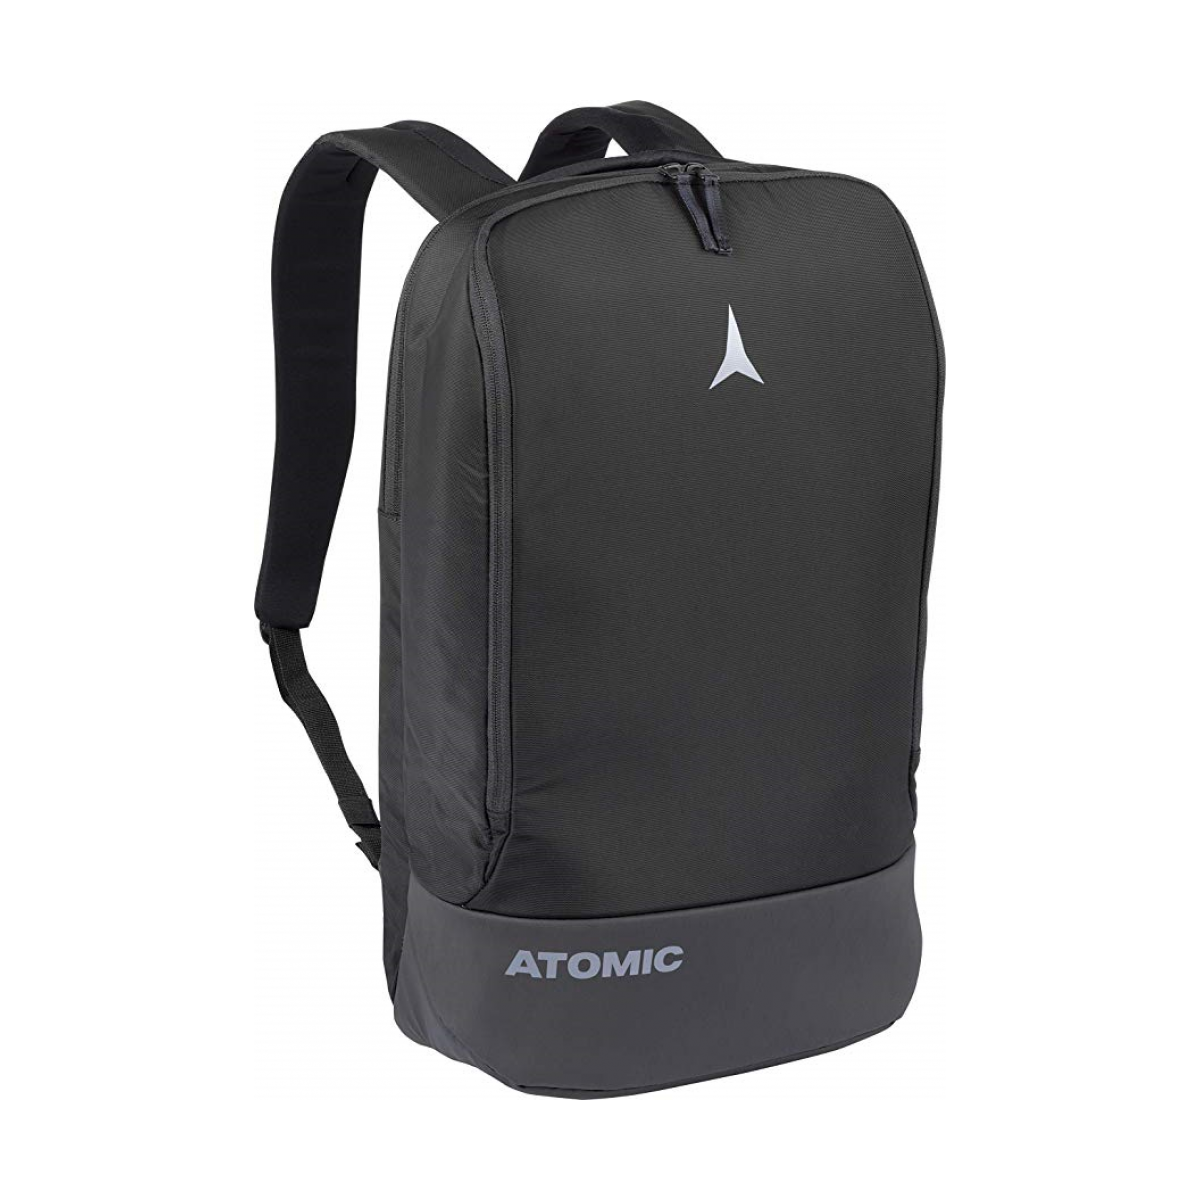 ATOMIC backpack  LAPTOP PACK black